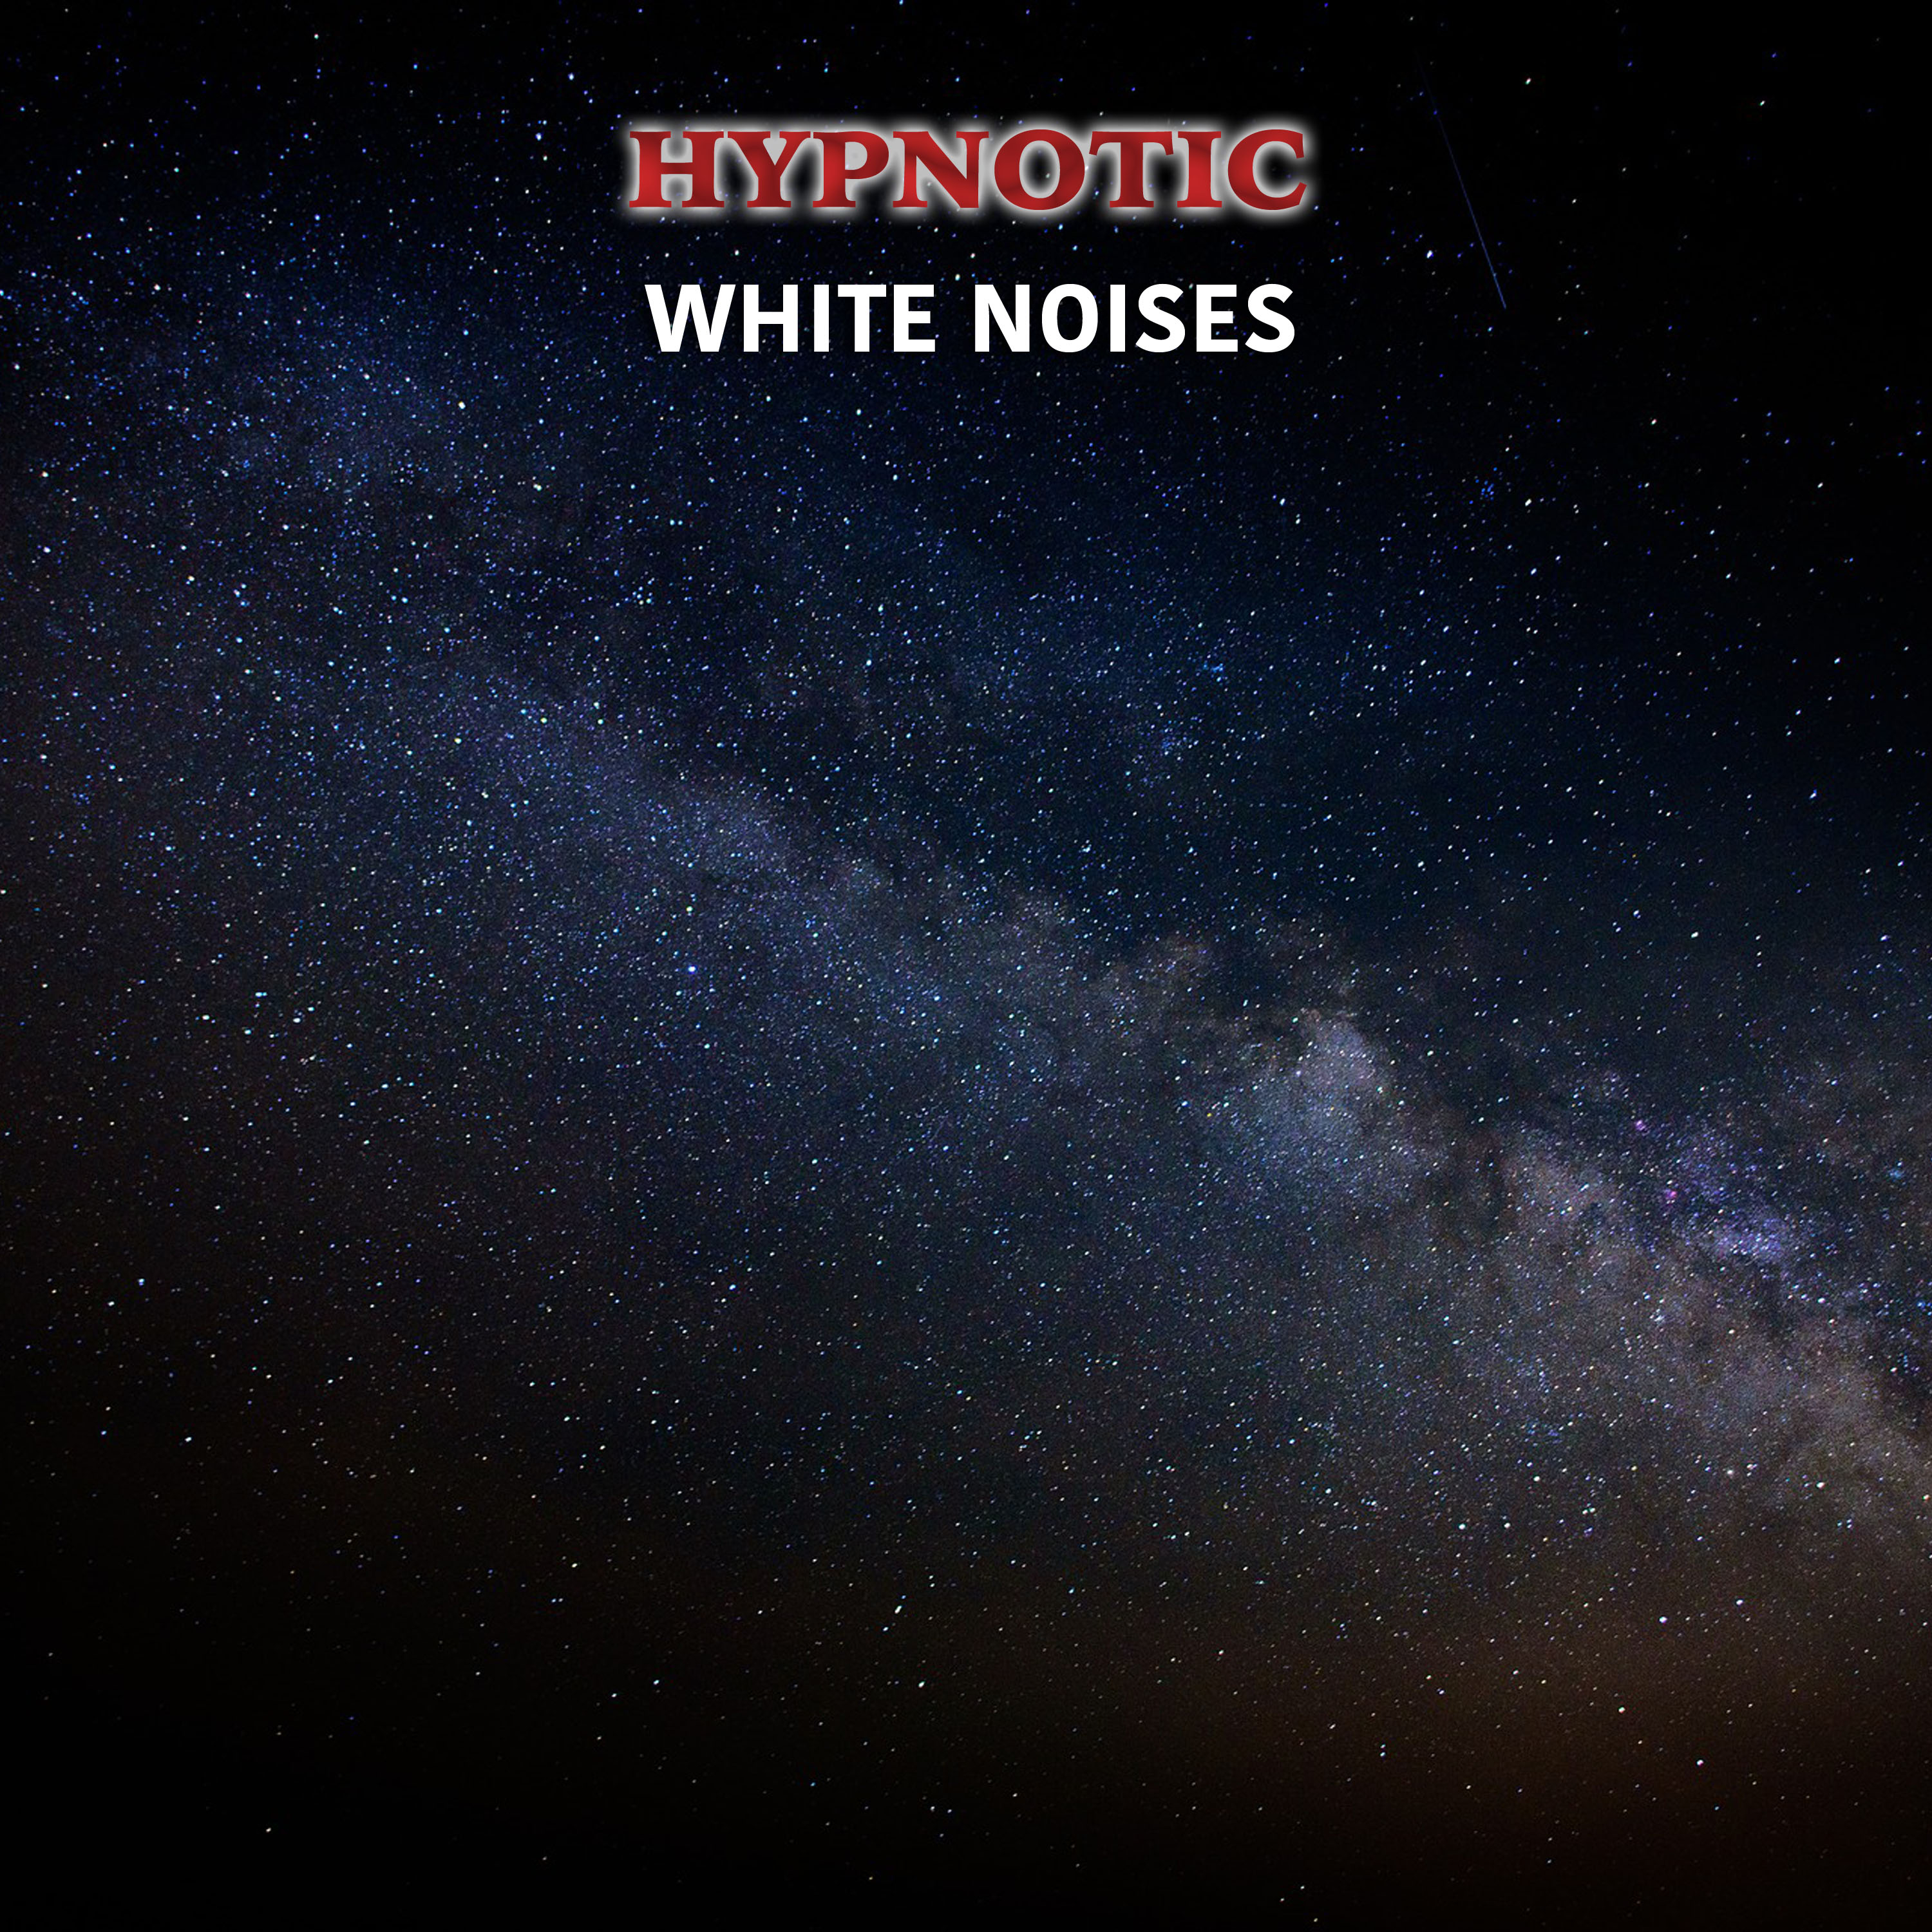 14 Hypnotic White Noises